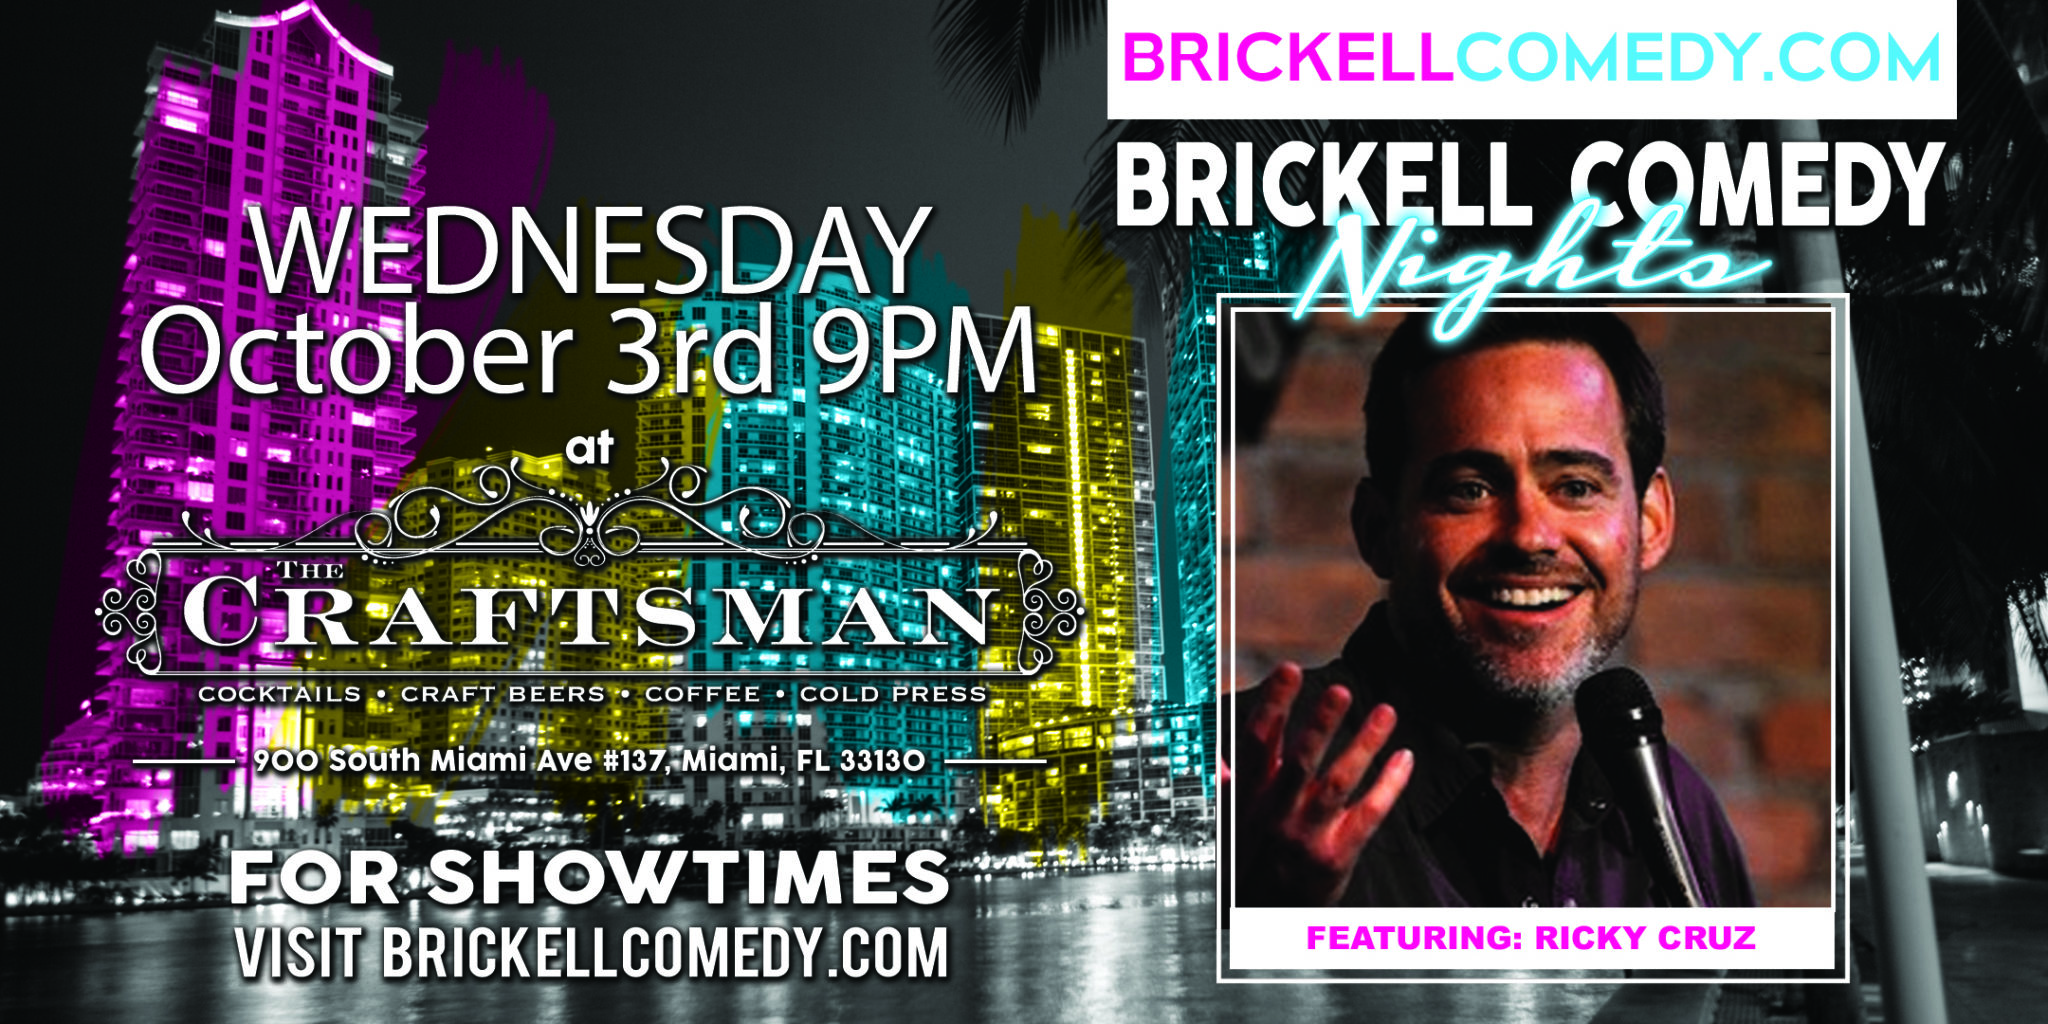 Brickell Comedy Night with Ricky Cruz